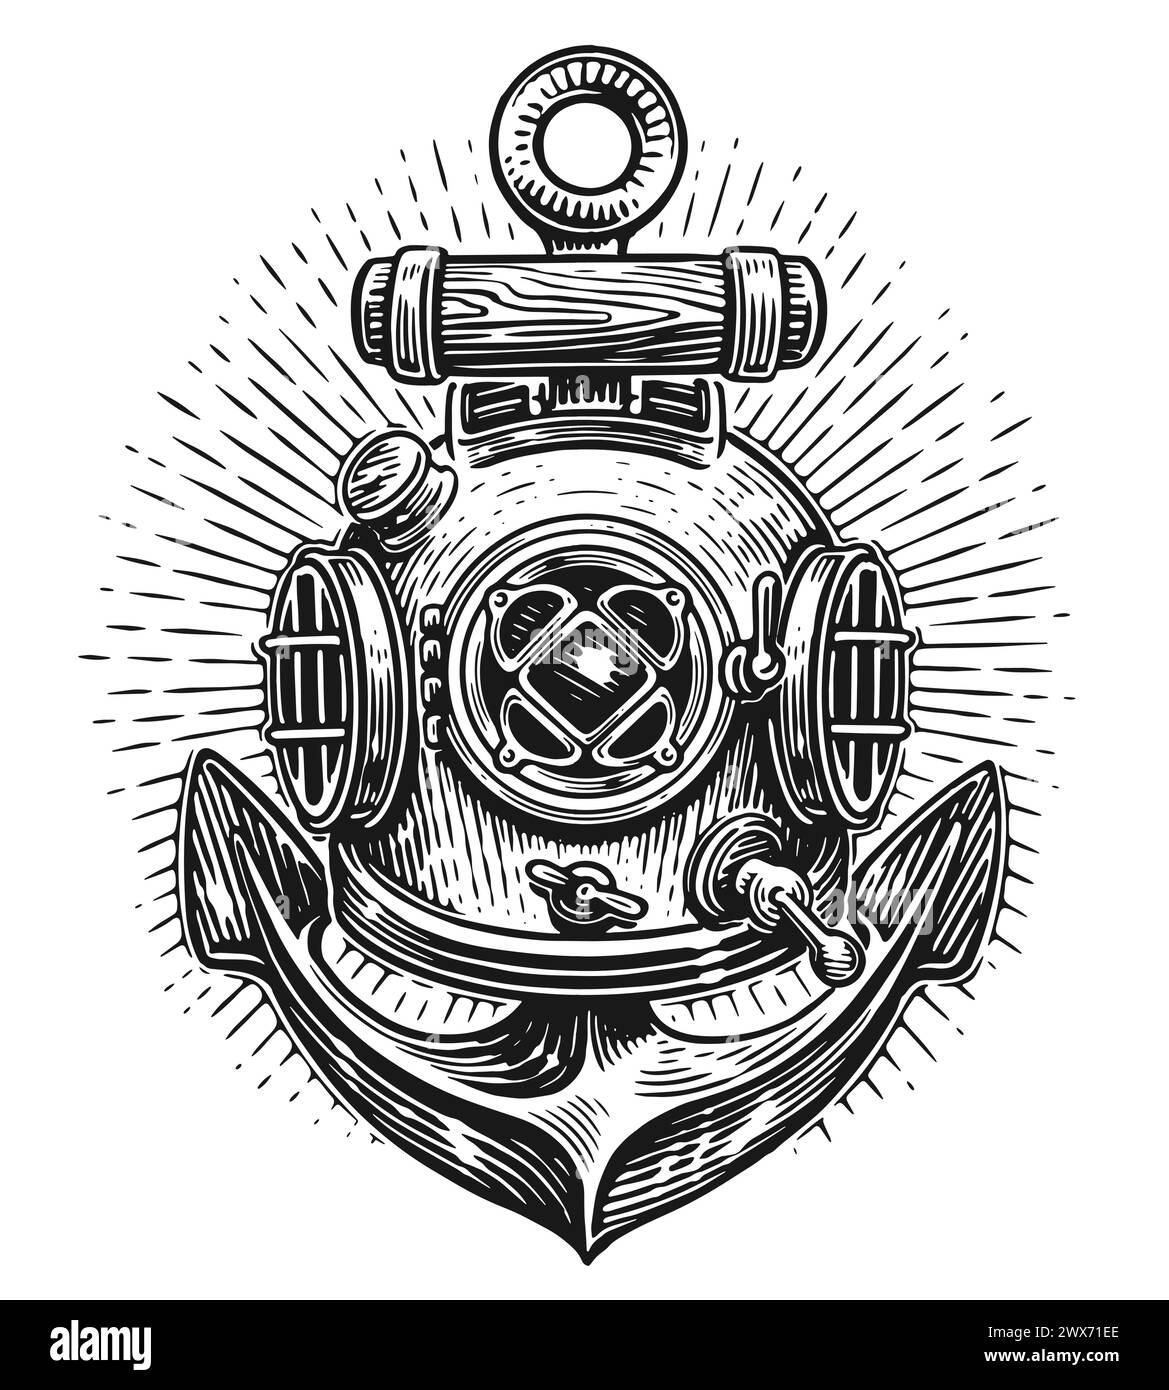 Tauchhelm und Schiffsanker. Nautisches, Marine Emblem. Skizze Vintage Vektor Illustration Gravur Stil Stock Vektor